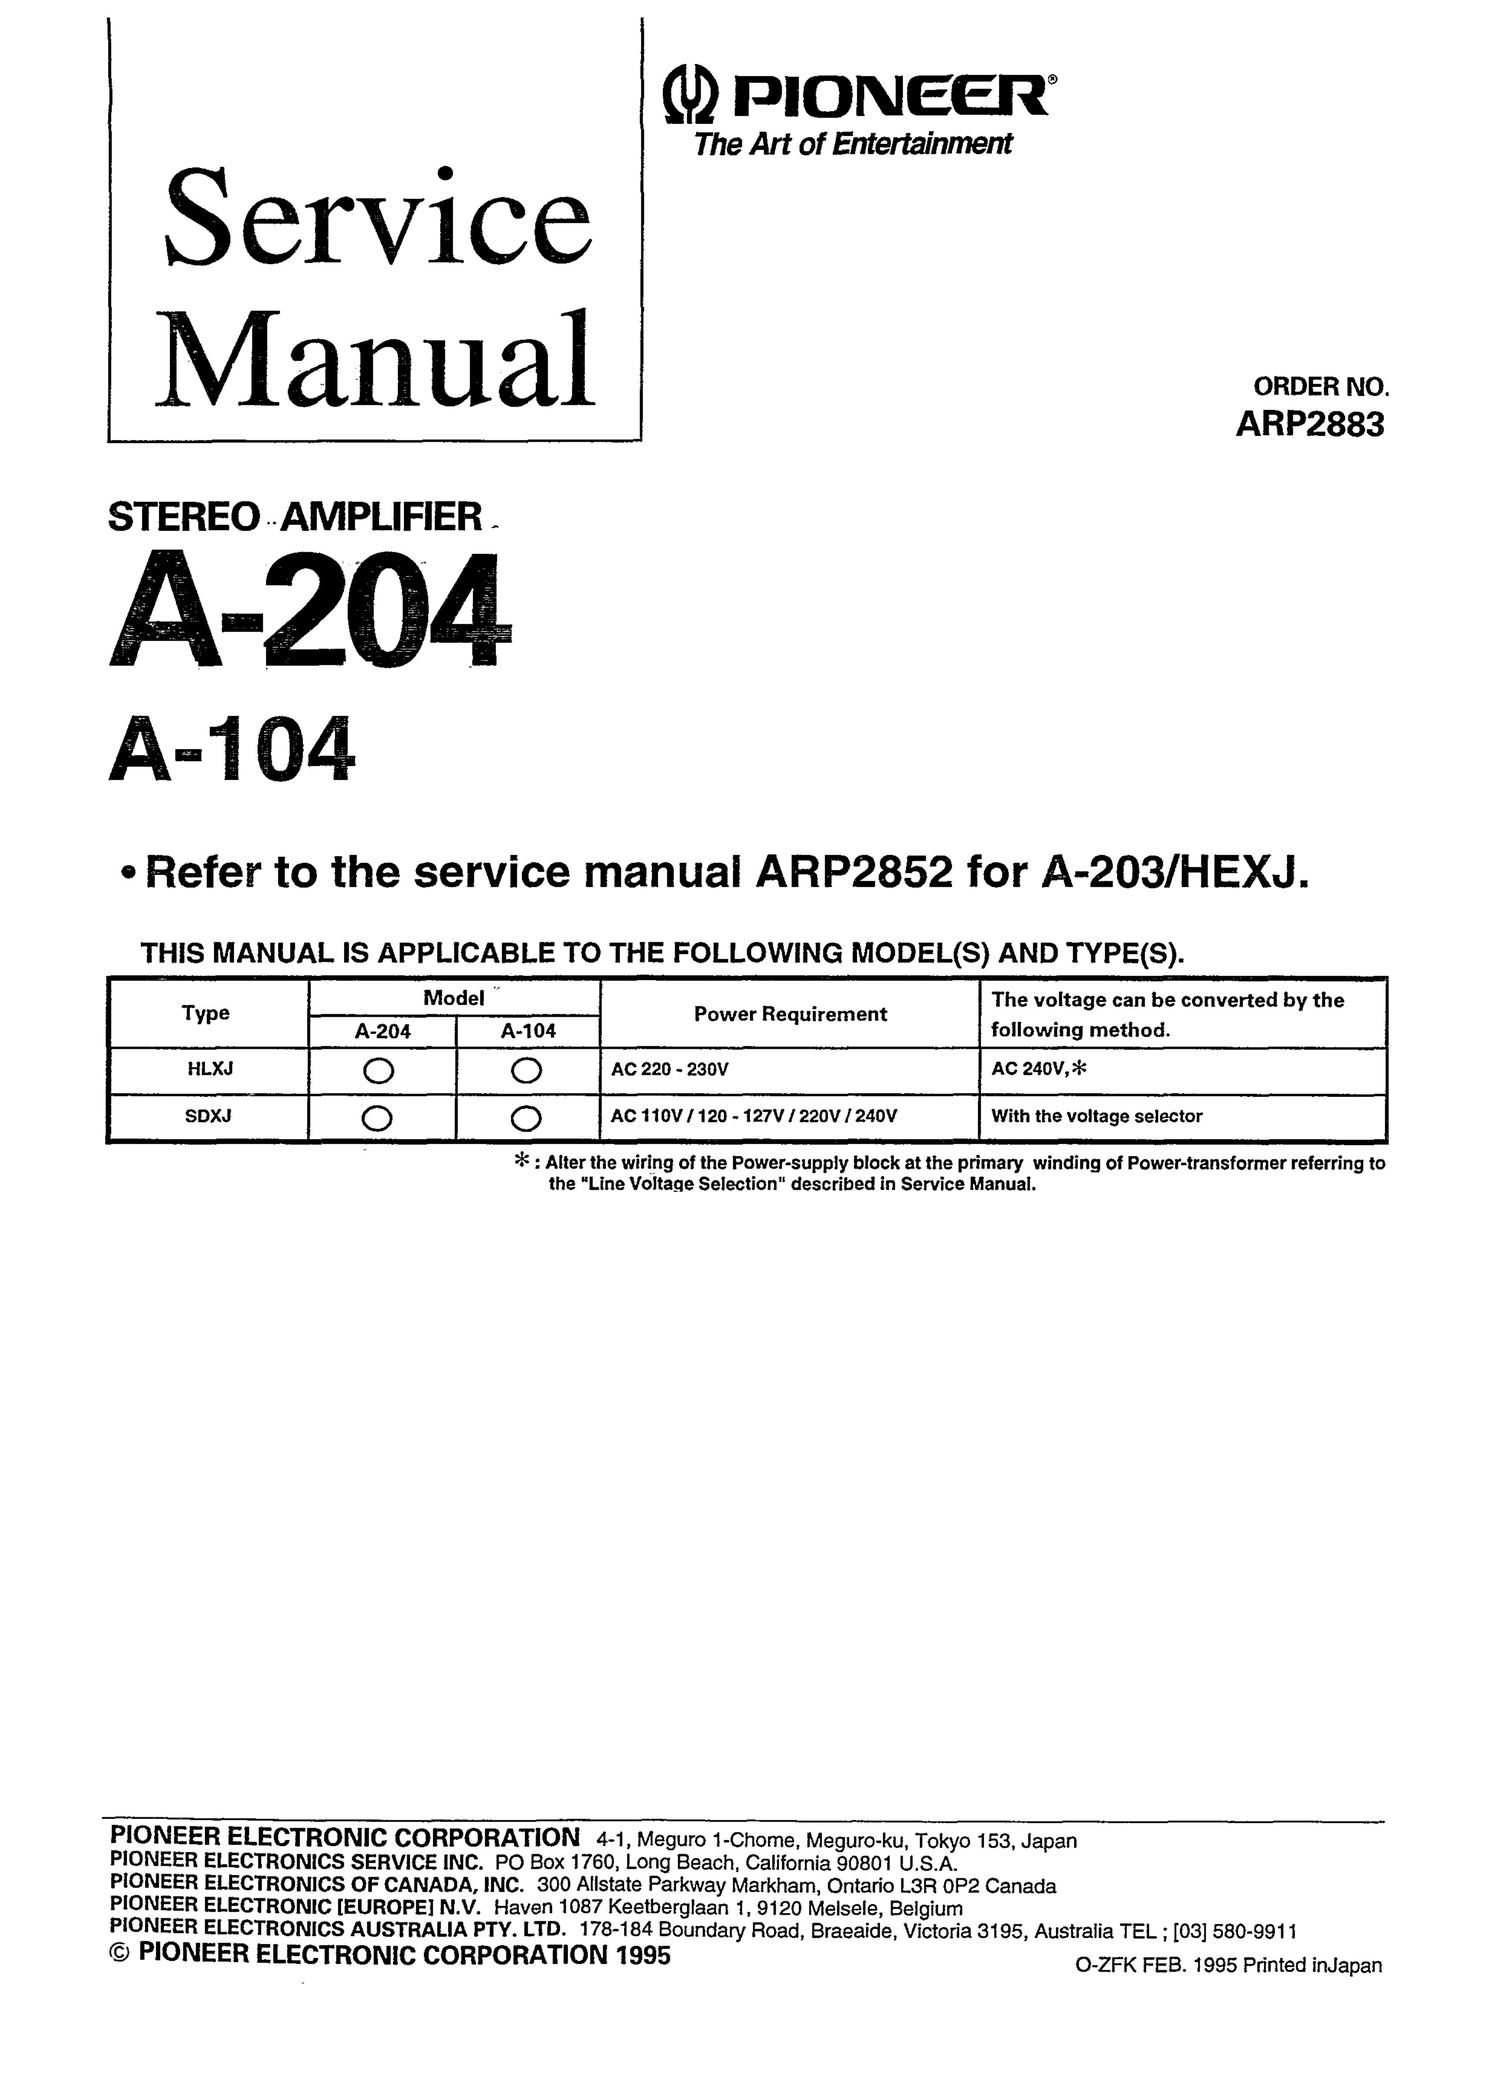 pioneer a 204 service manual